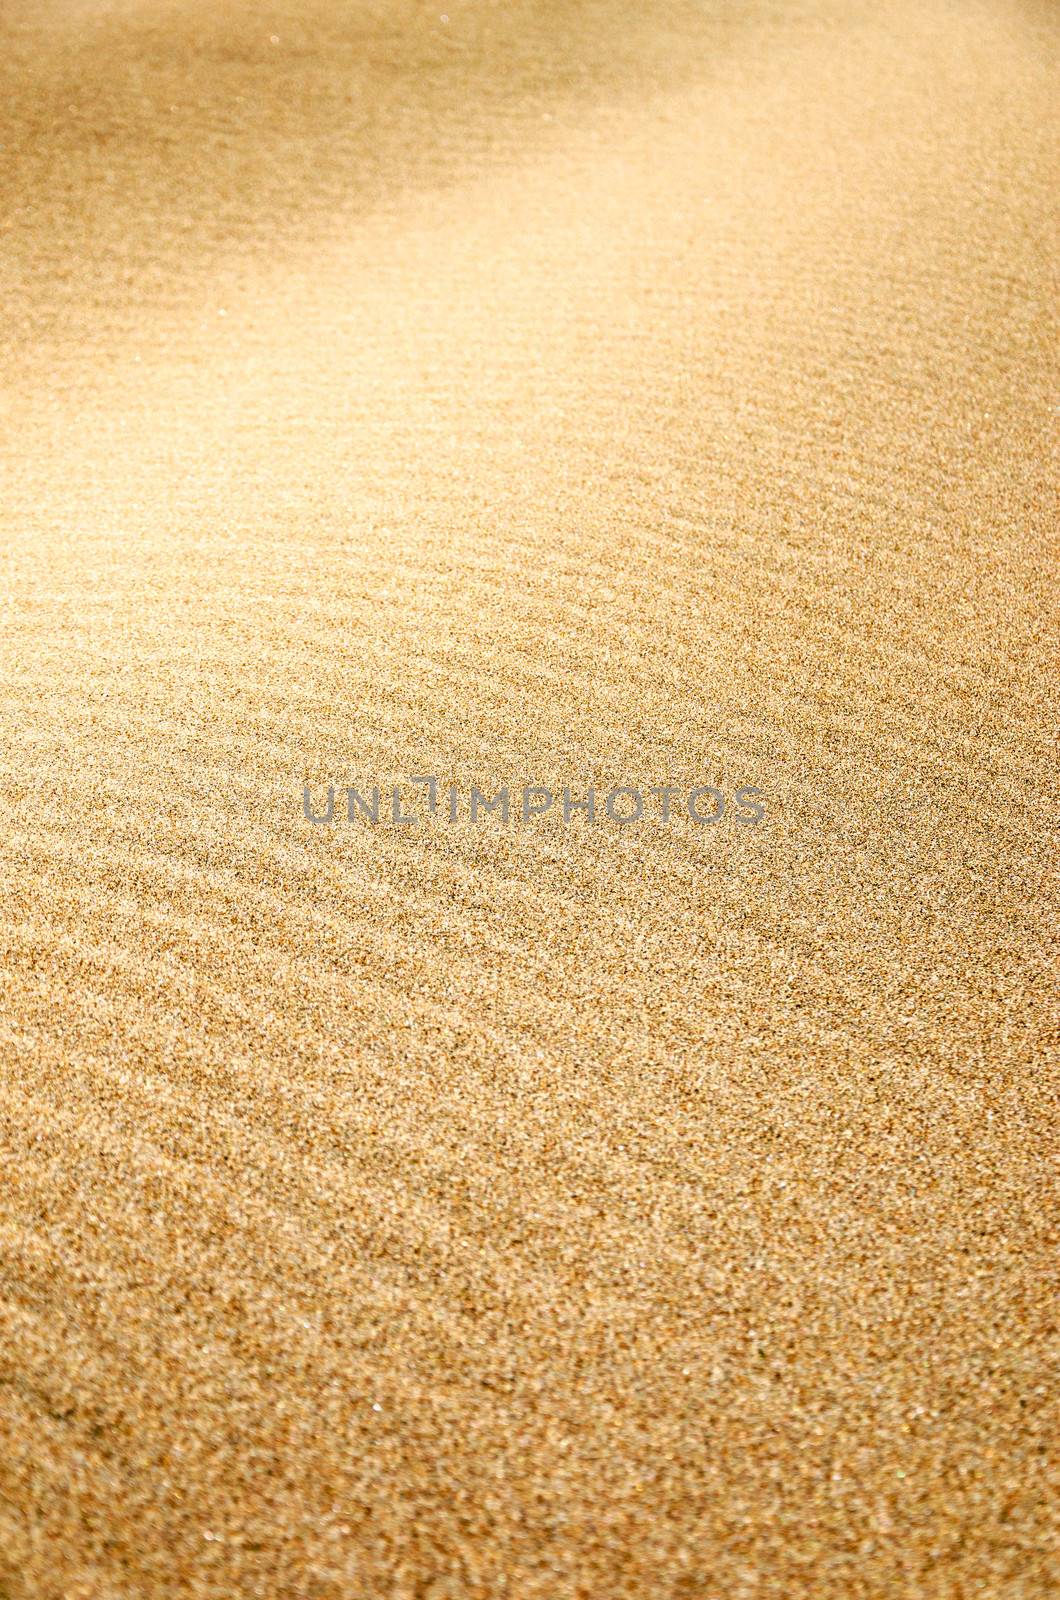 Sand Ripples by jkraft5